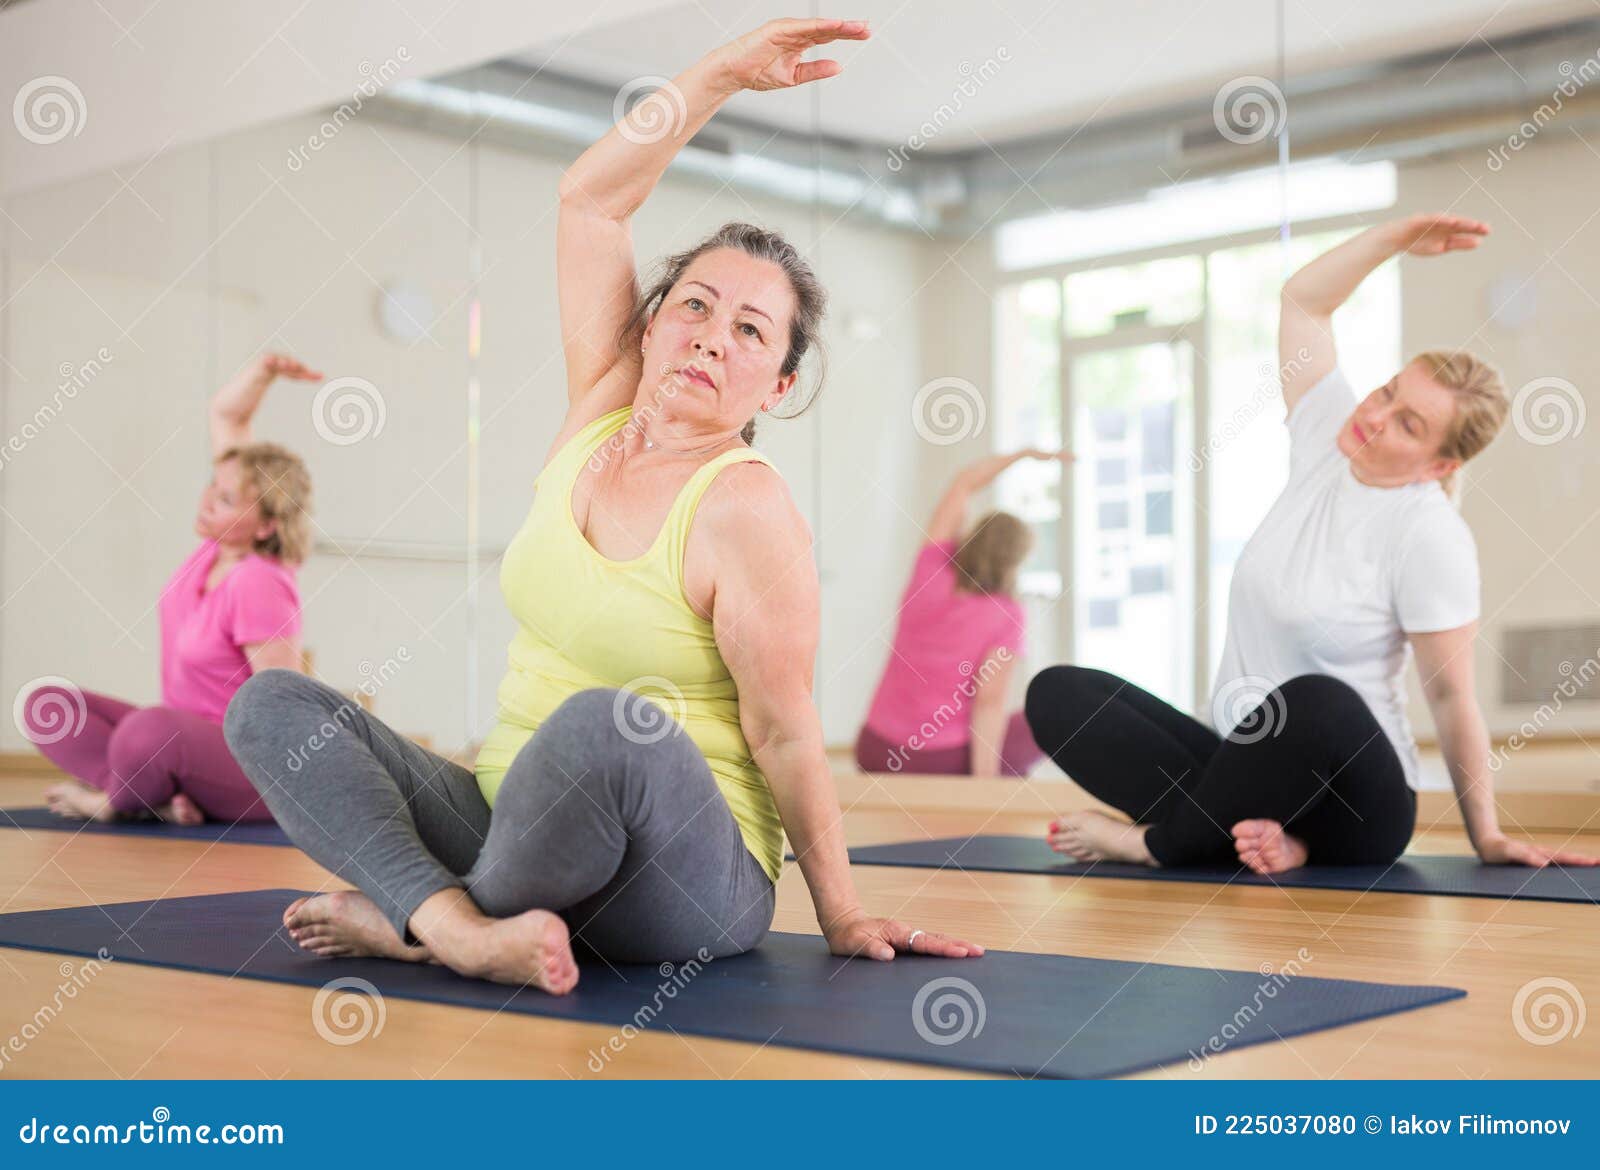 Ashta vakrasana- This difficult... - Fitness and Yoga Goals | Facebook